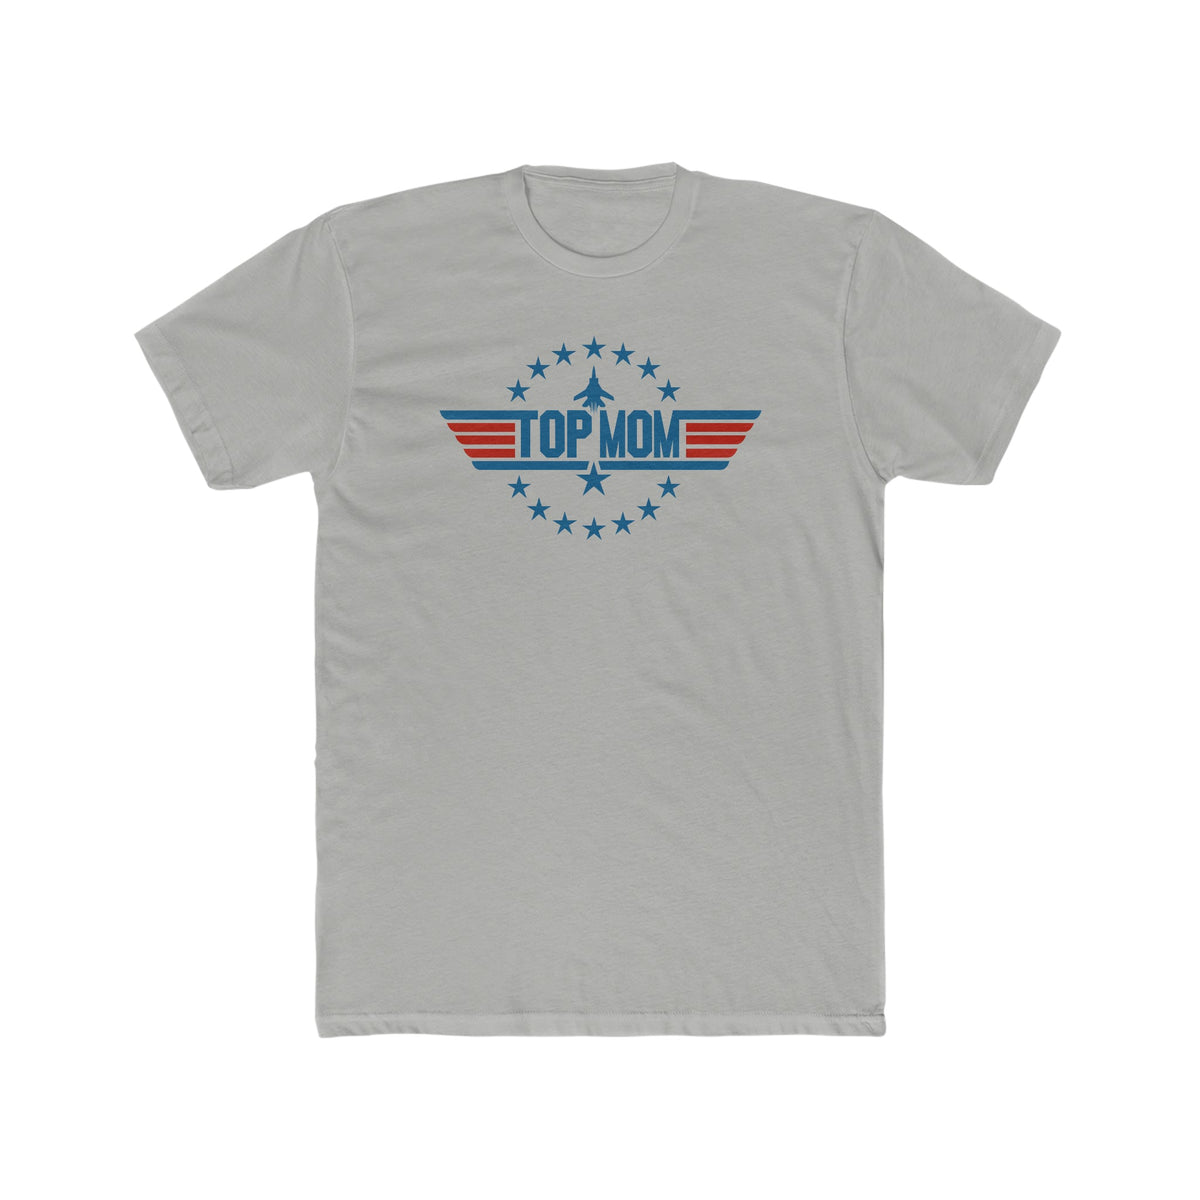 Topmom Deluxe Unisex T-shirt